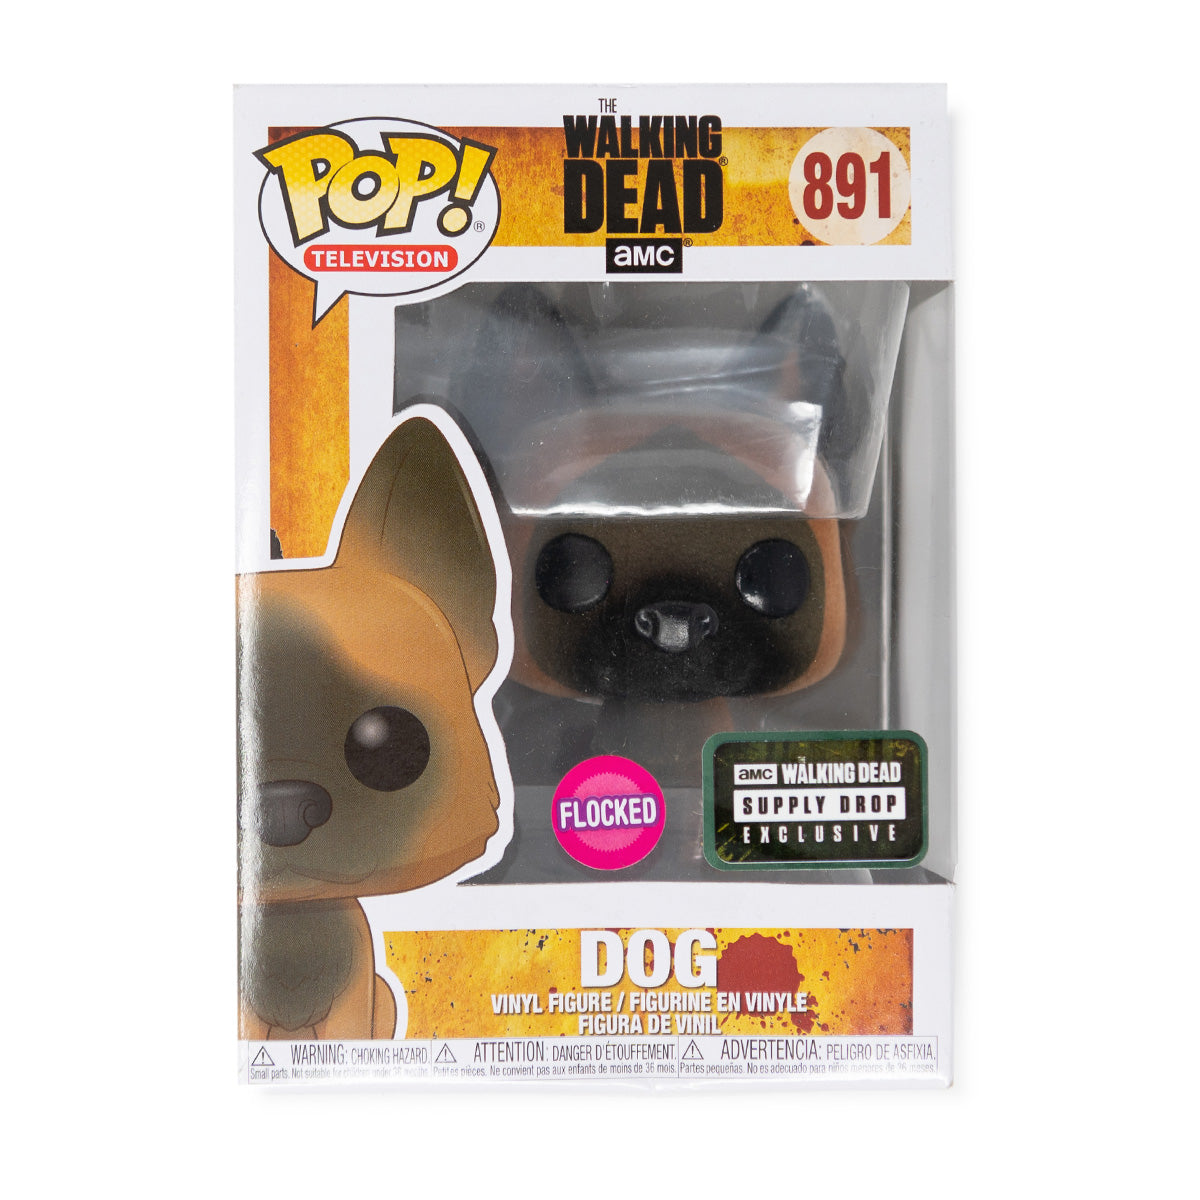 Supply Drop Exclusive Dog Flocked Funko POP!